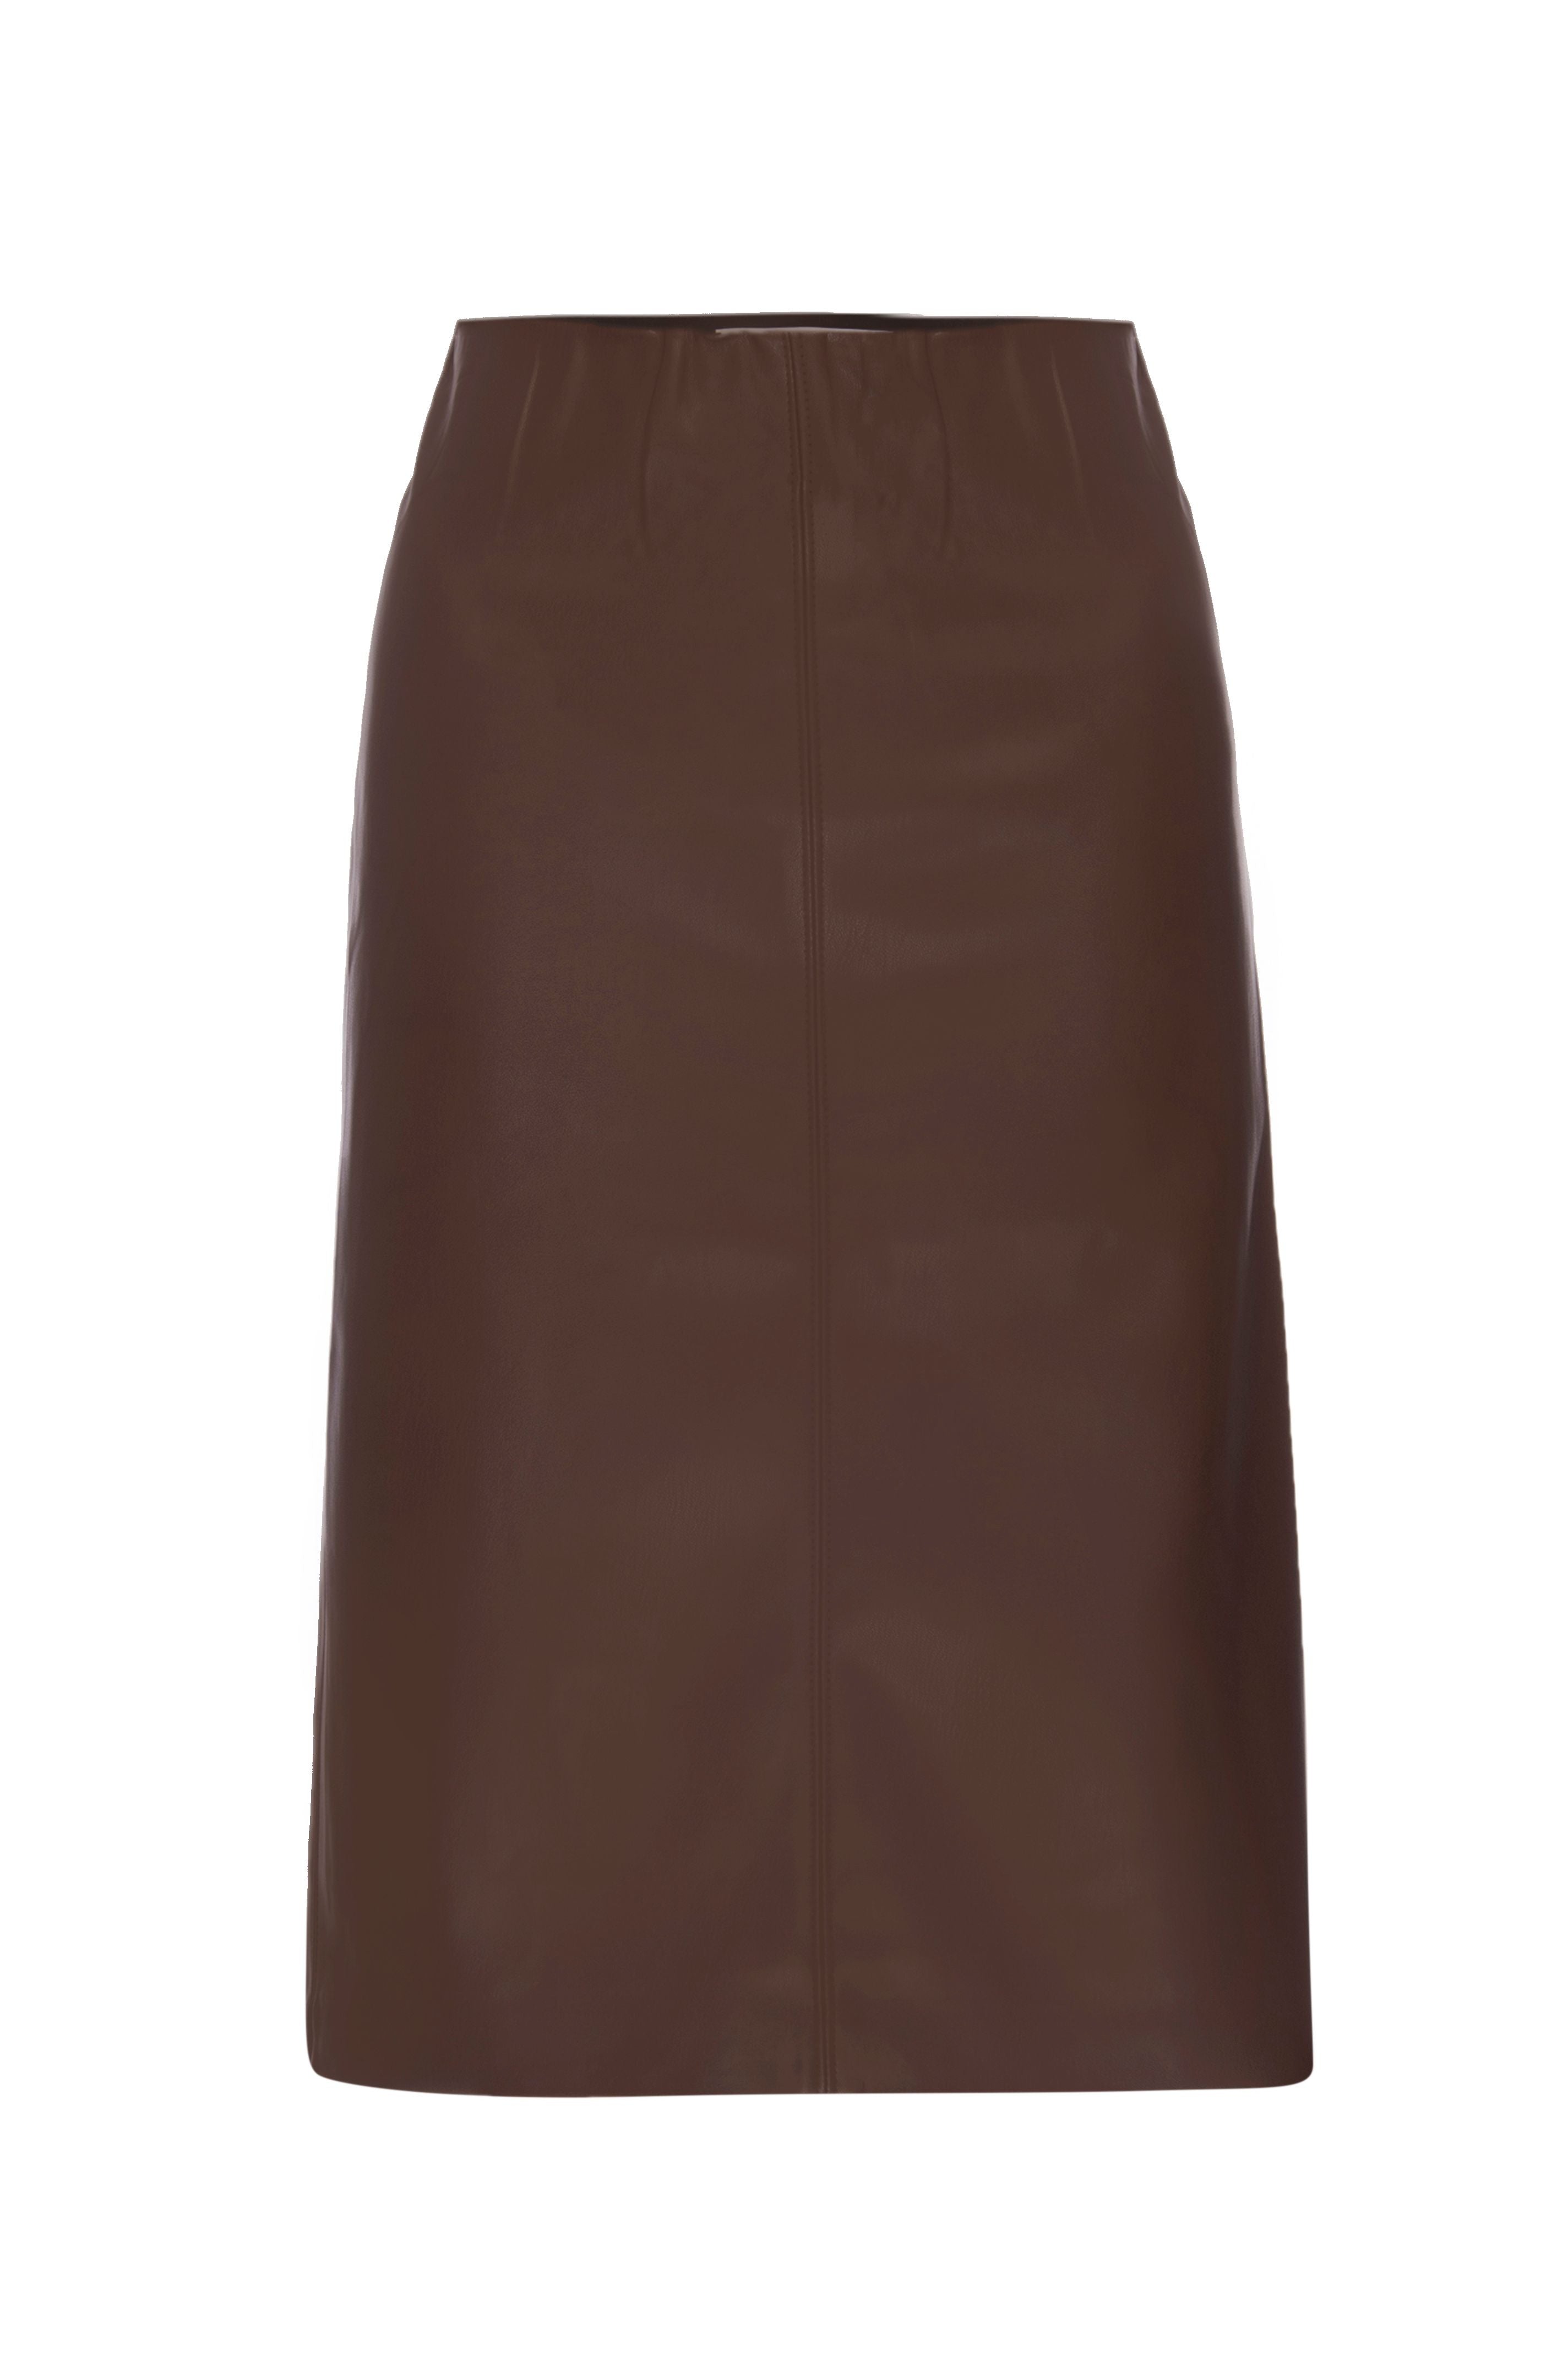 River brown vegan leather knee-length skirt flat view